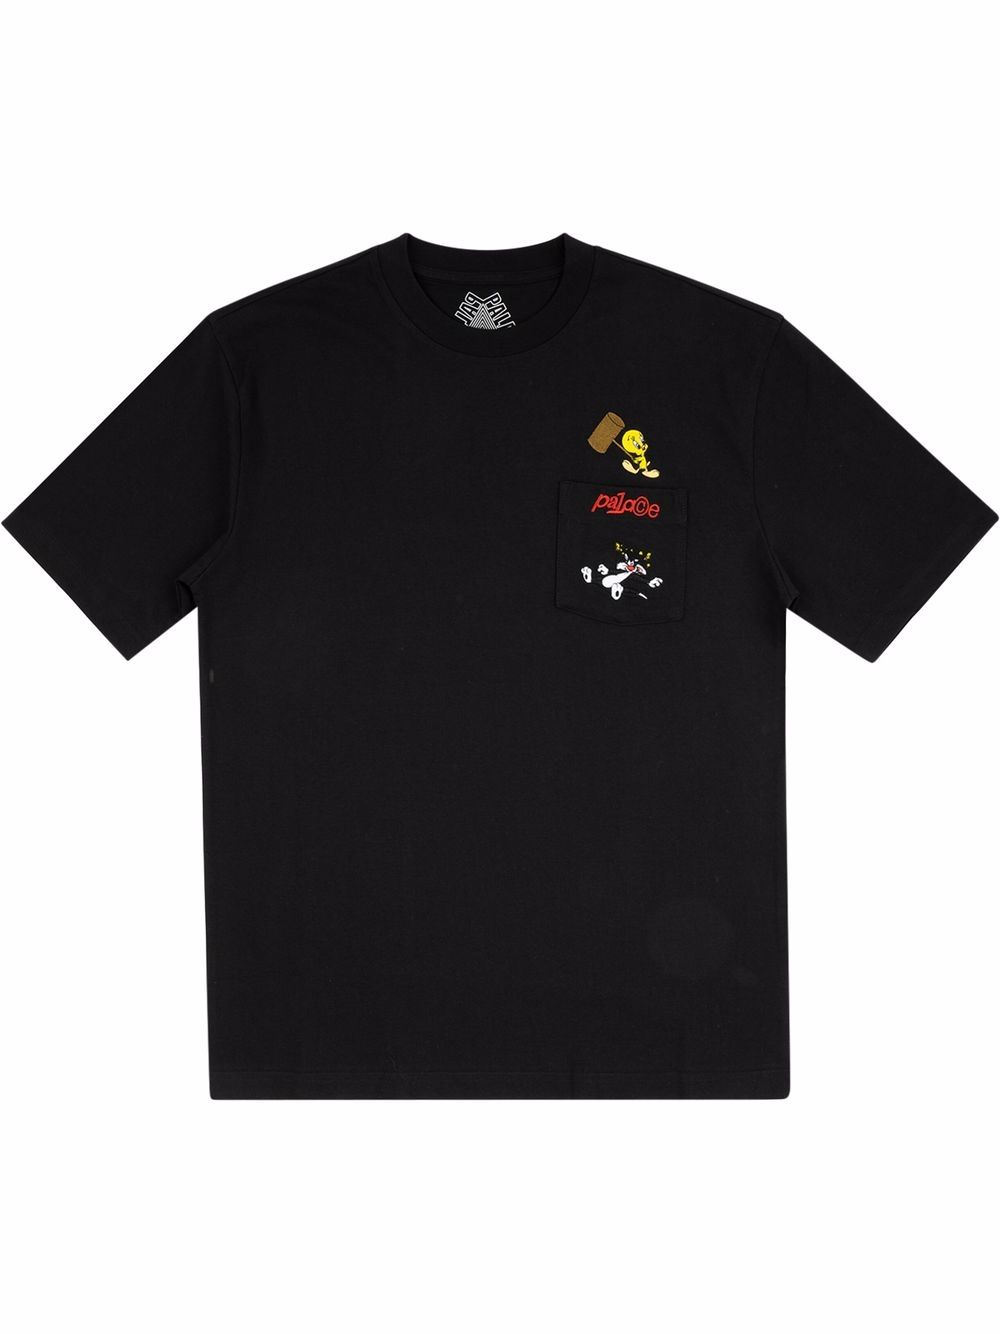 фото Palace футболка tweety bird с логотипом